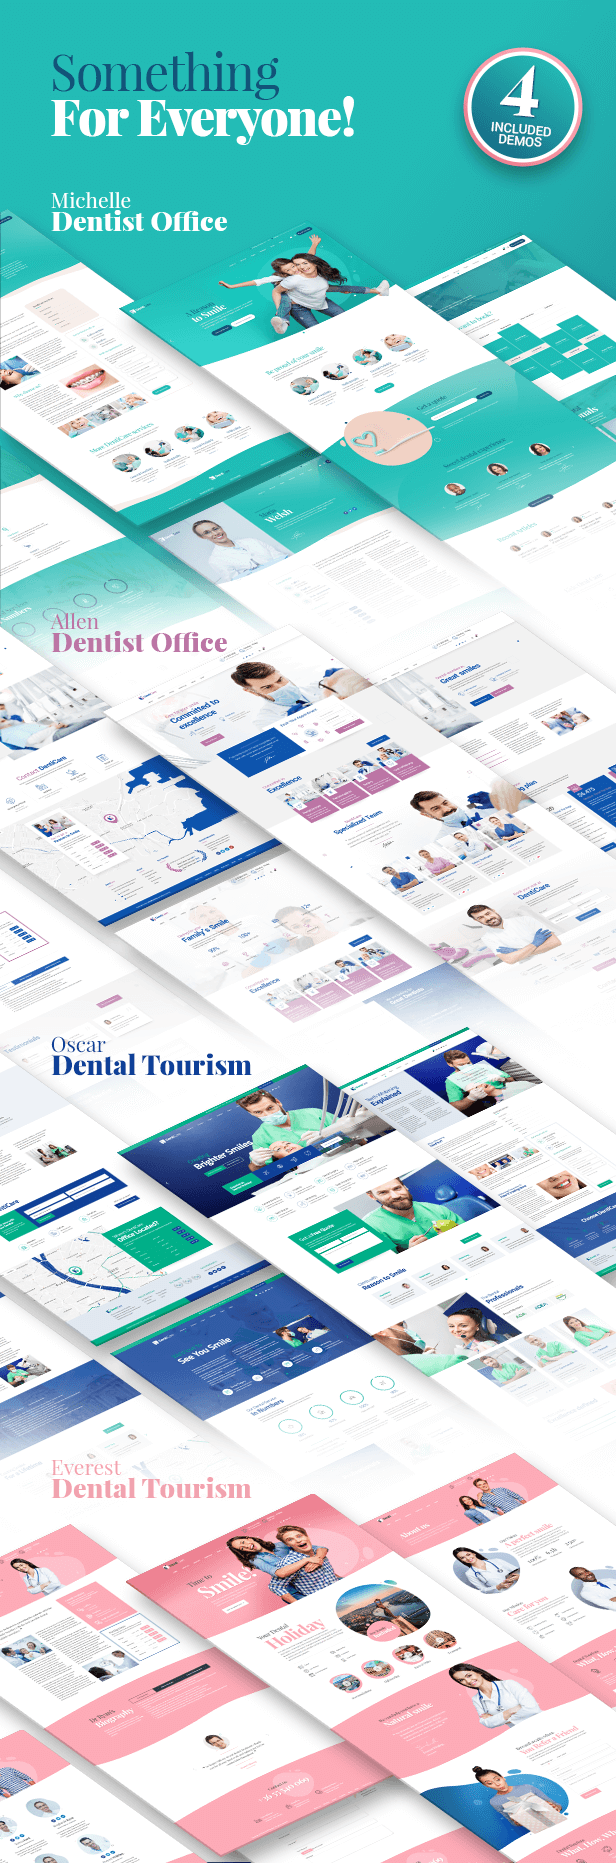 DentiCare - Medical, Dentist & Dental Clinic - 4